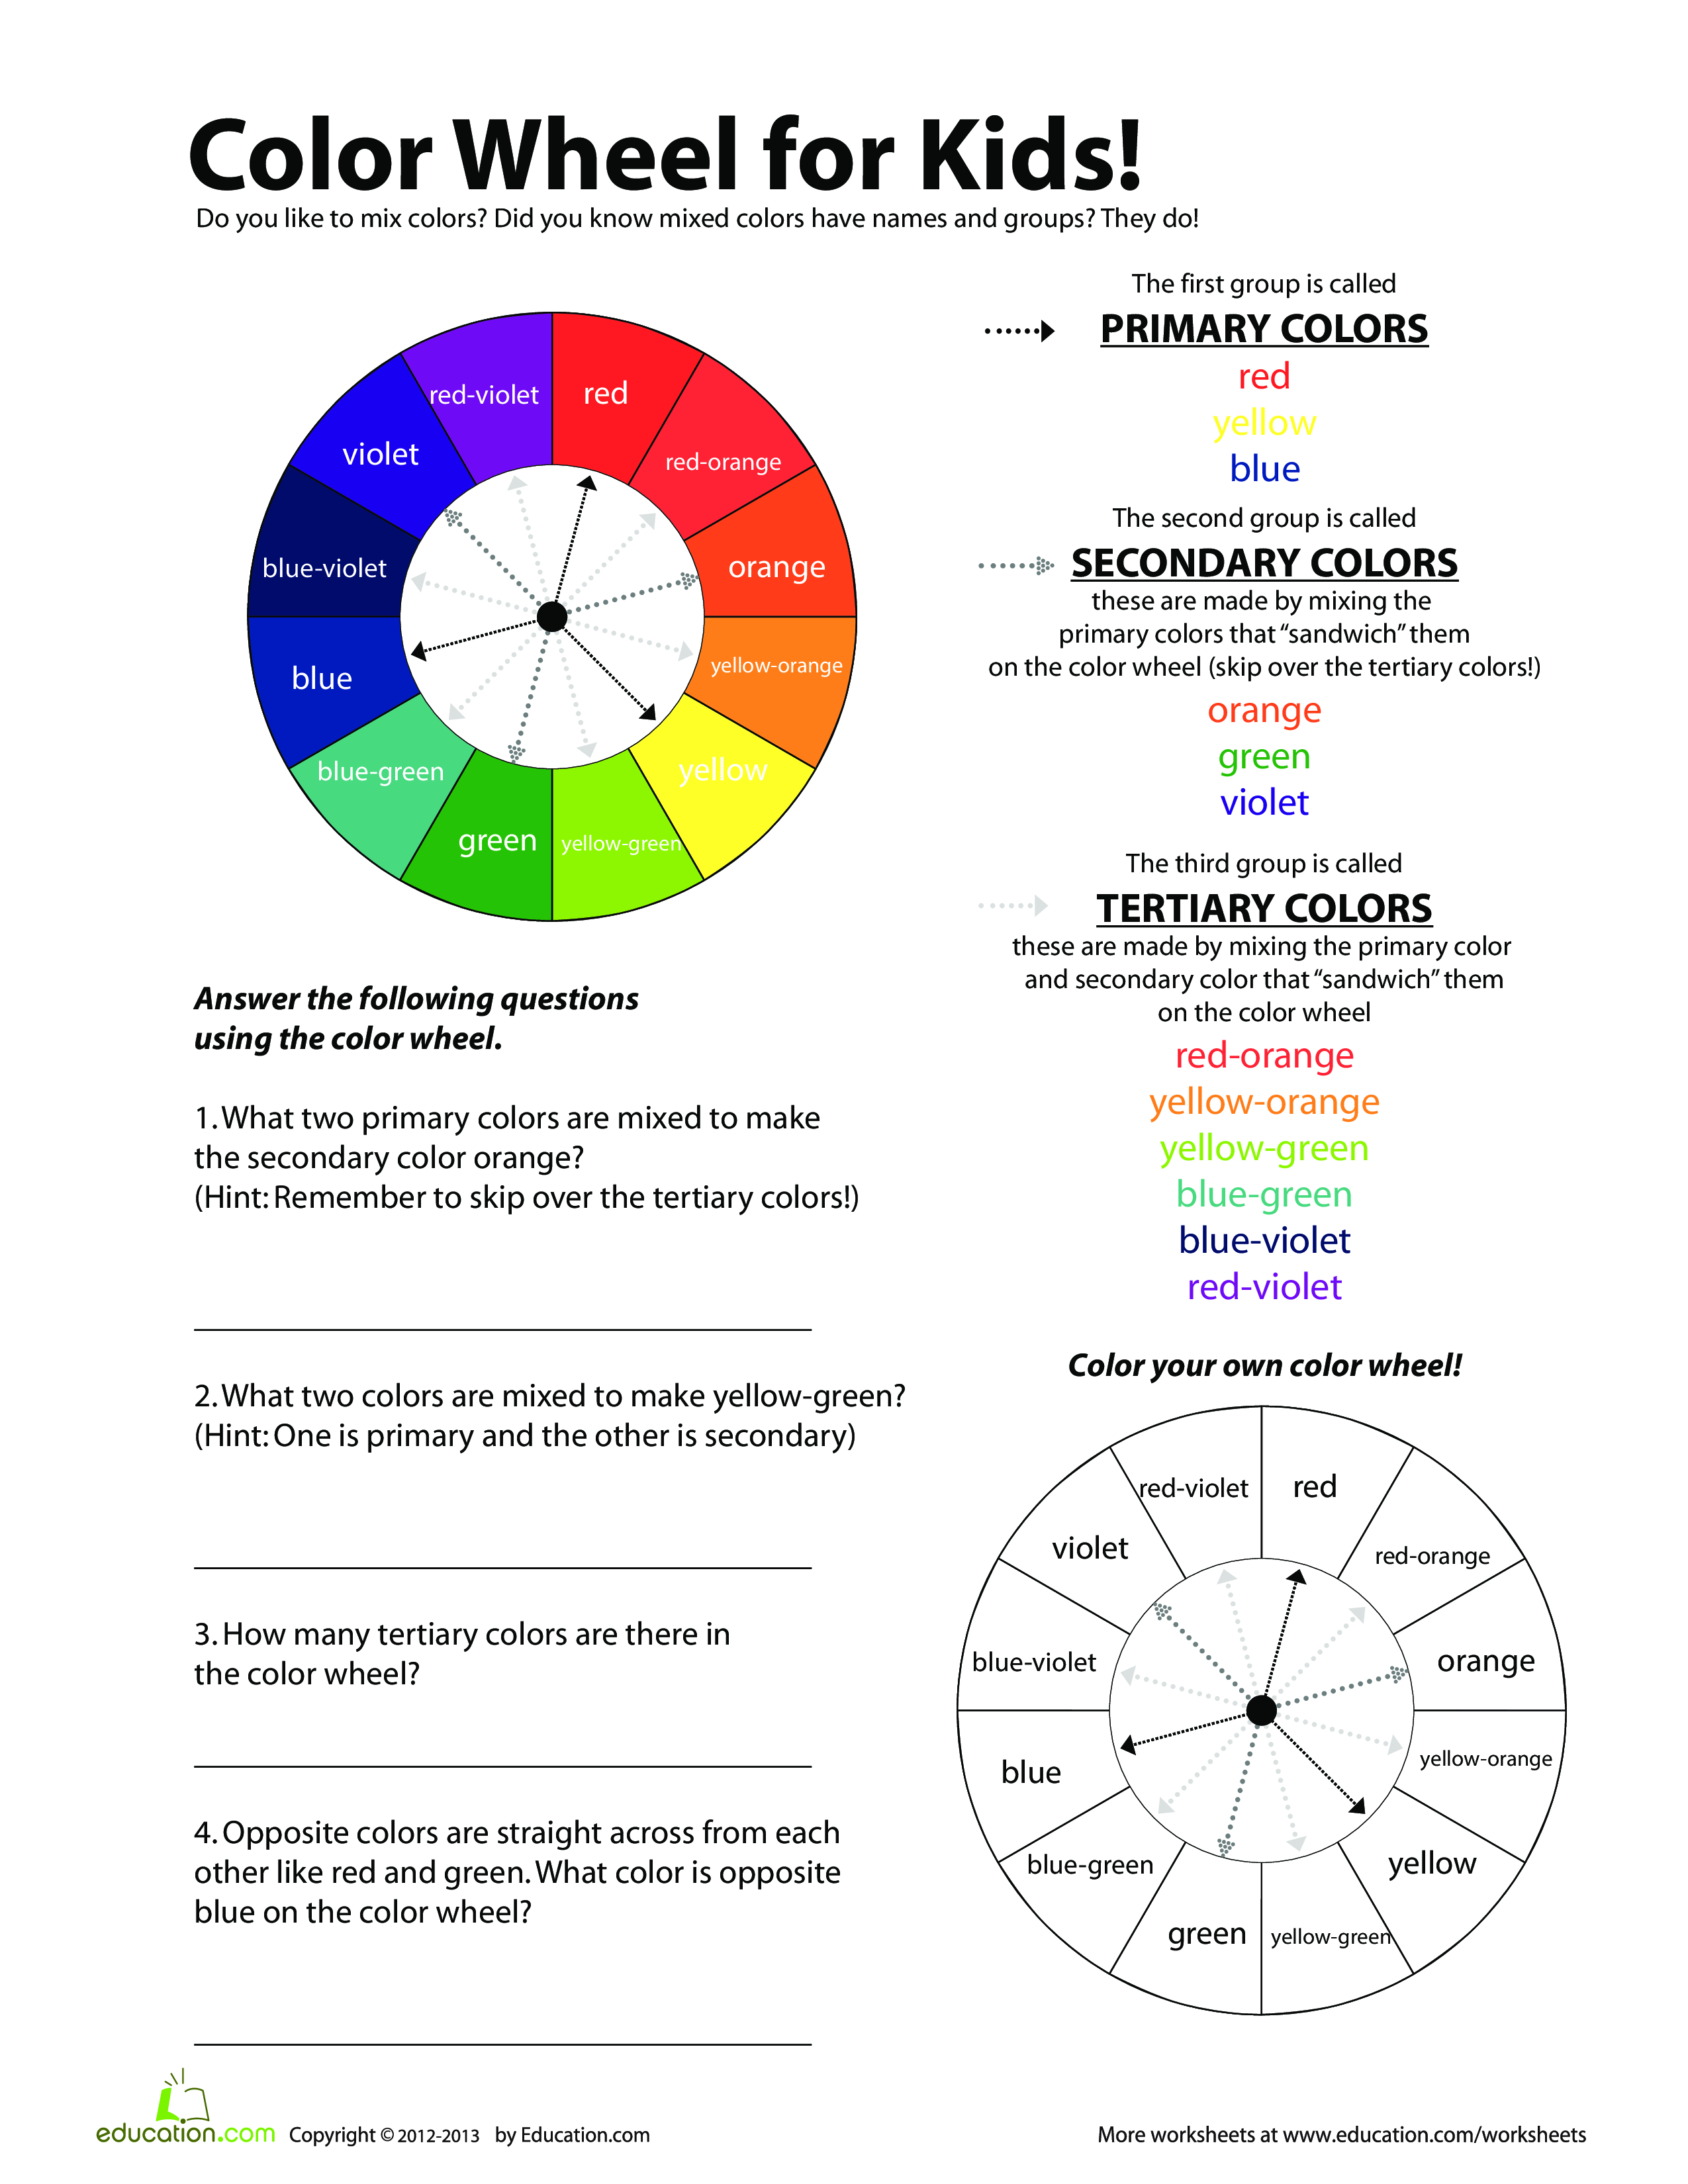 color wheel chart for kids plantilla imagen principal